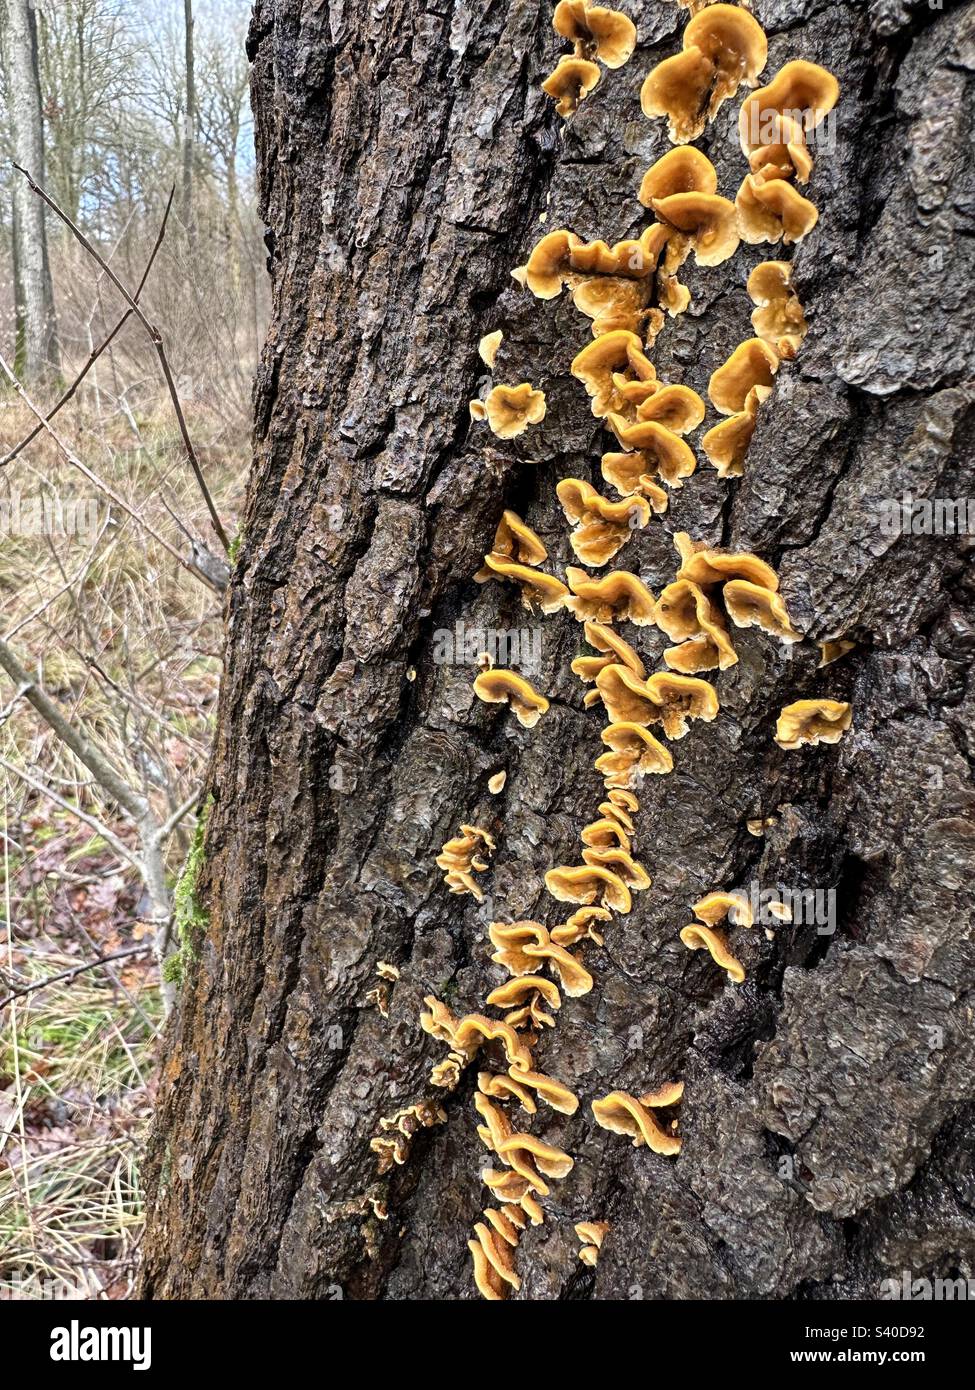 Fungi on tree Stock Photo